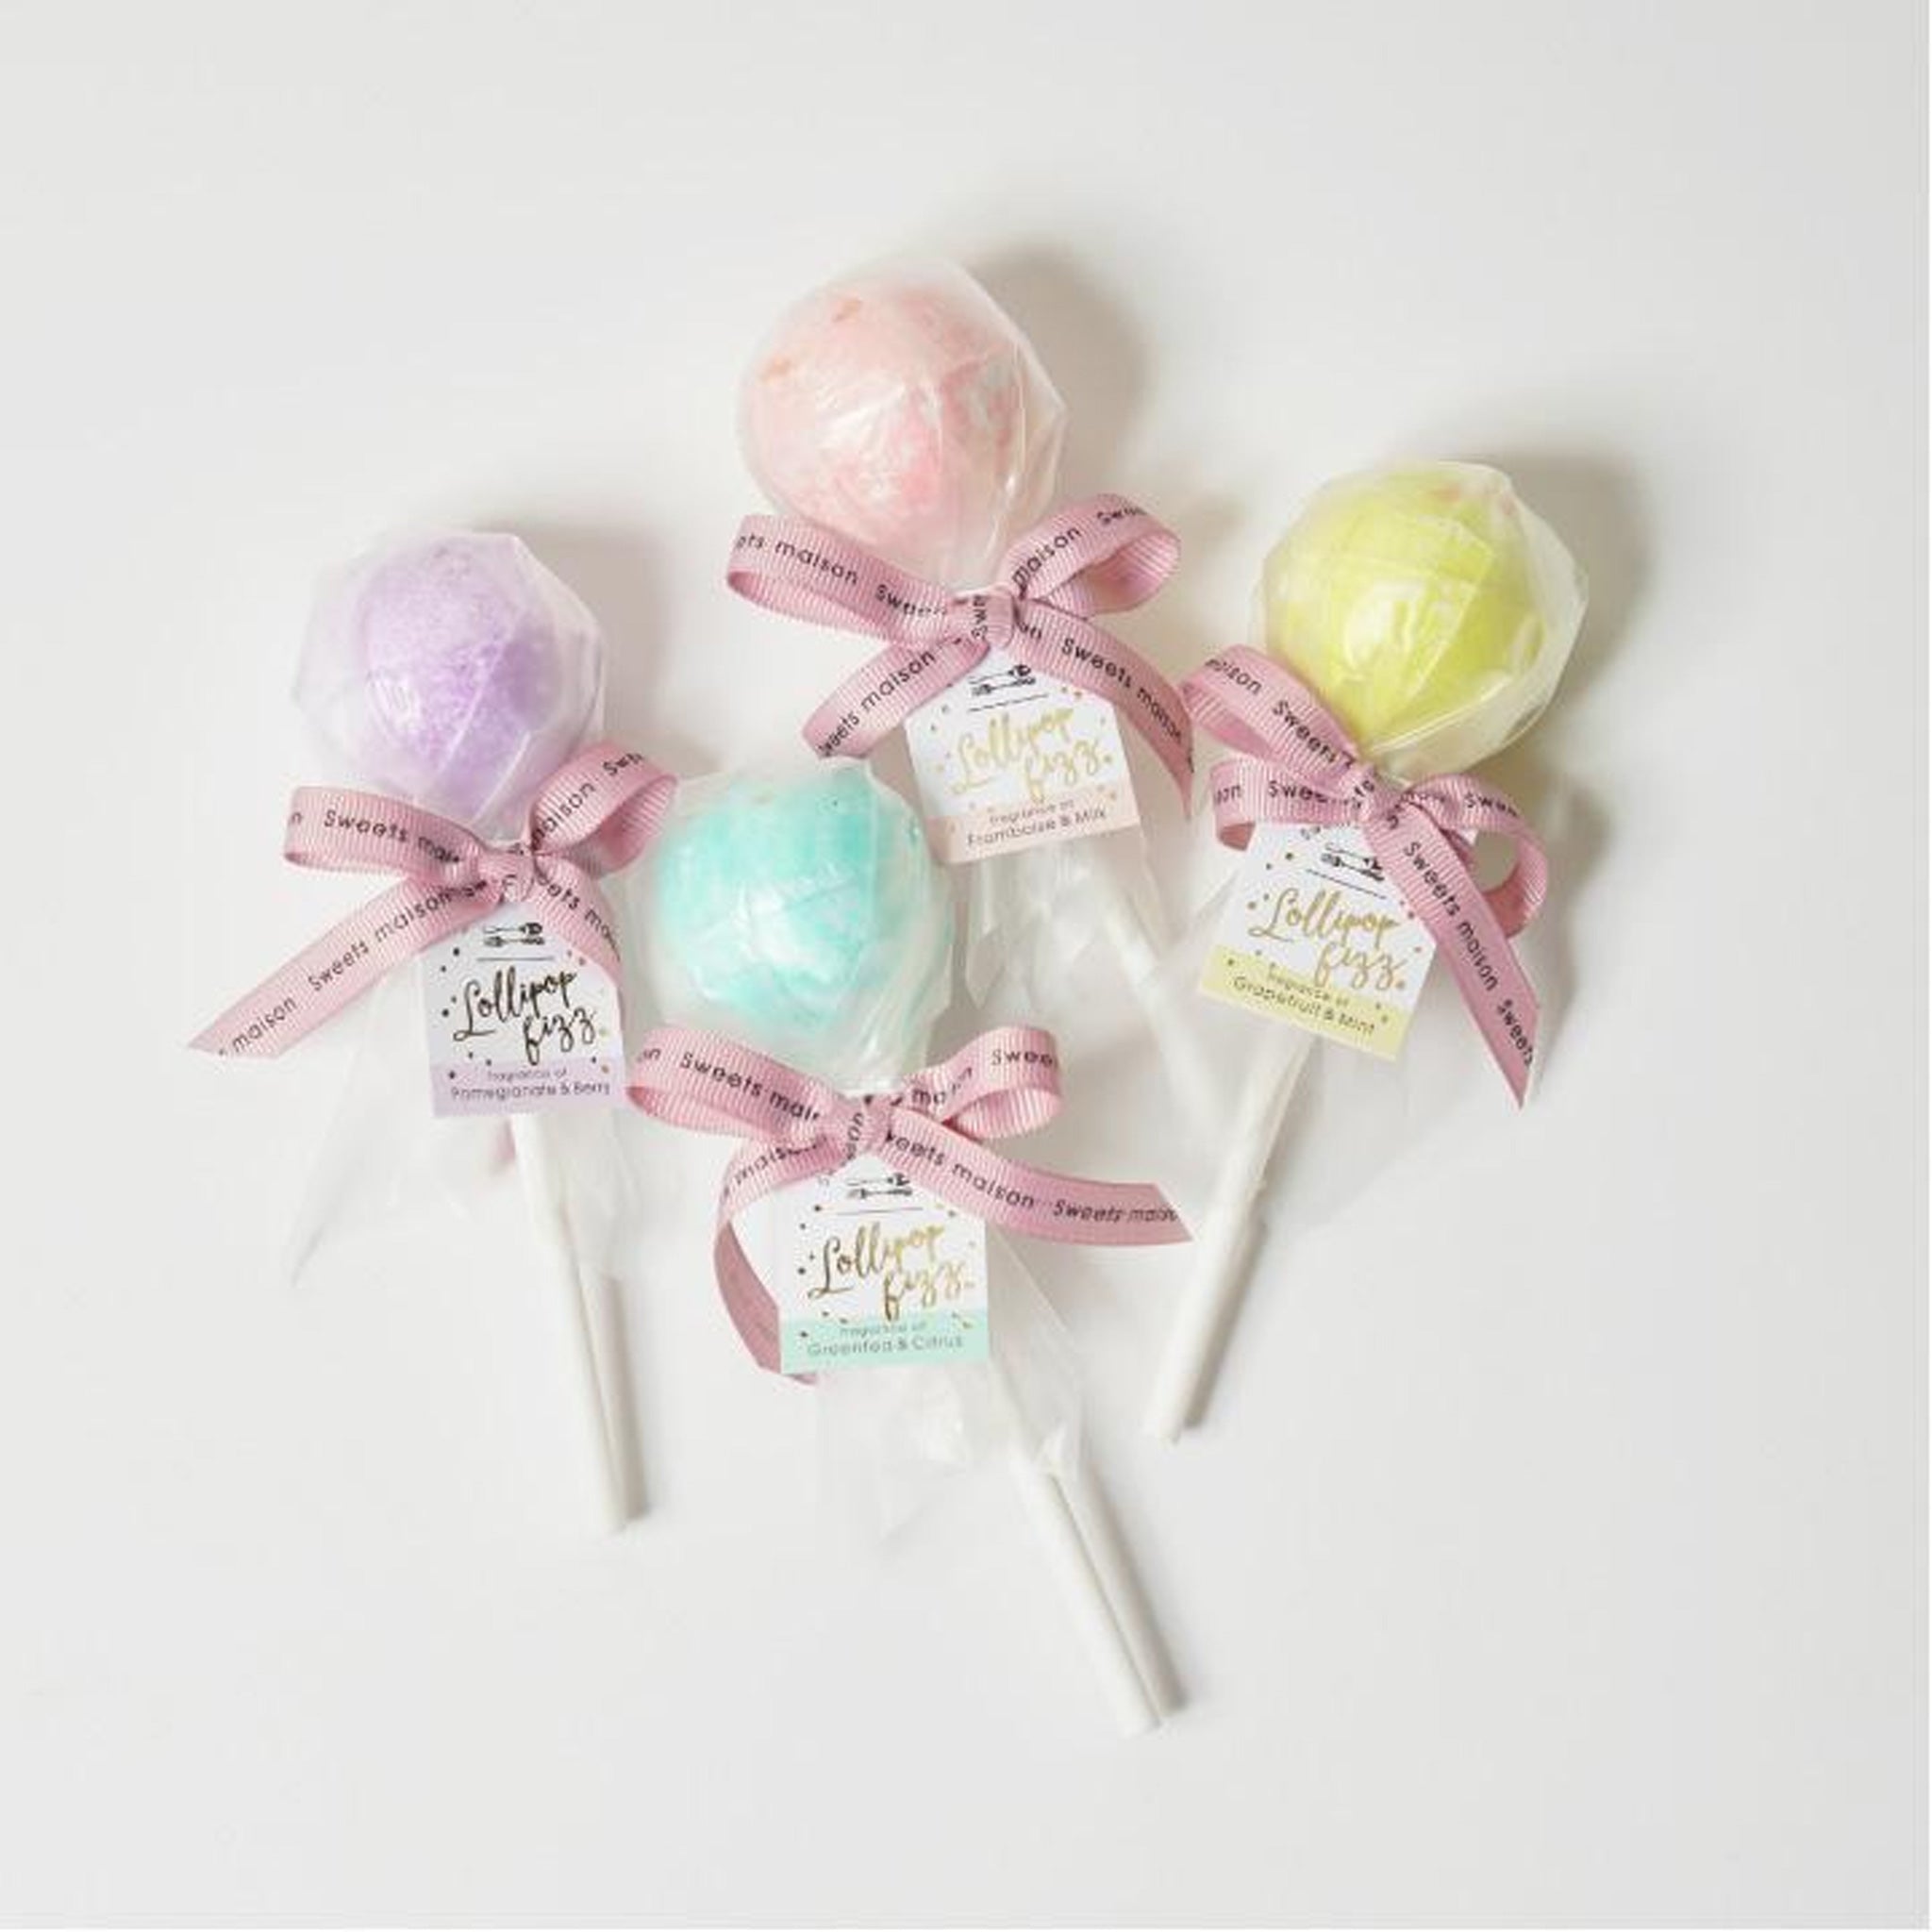 Fueki Sweets Maison Lollipop Bath Salt Fizz